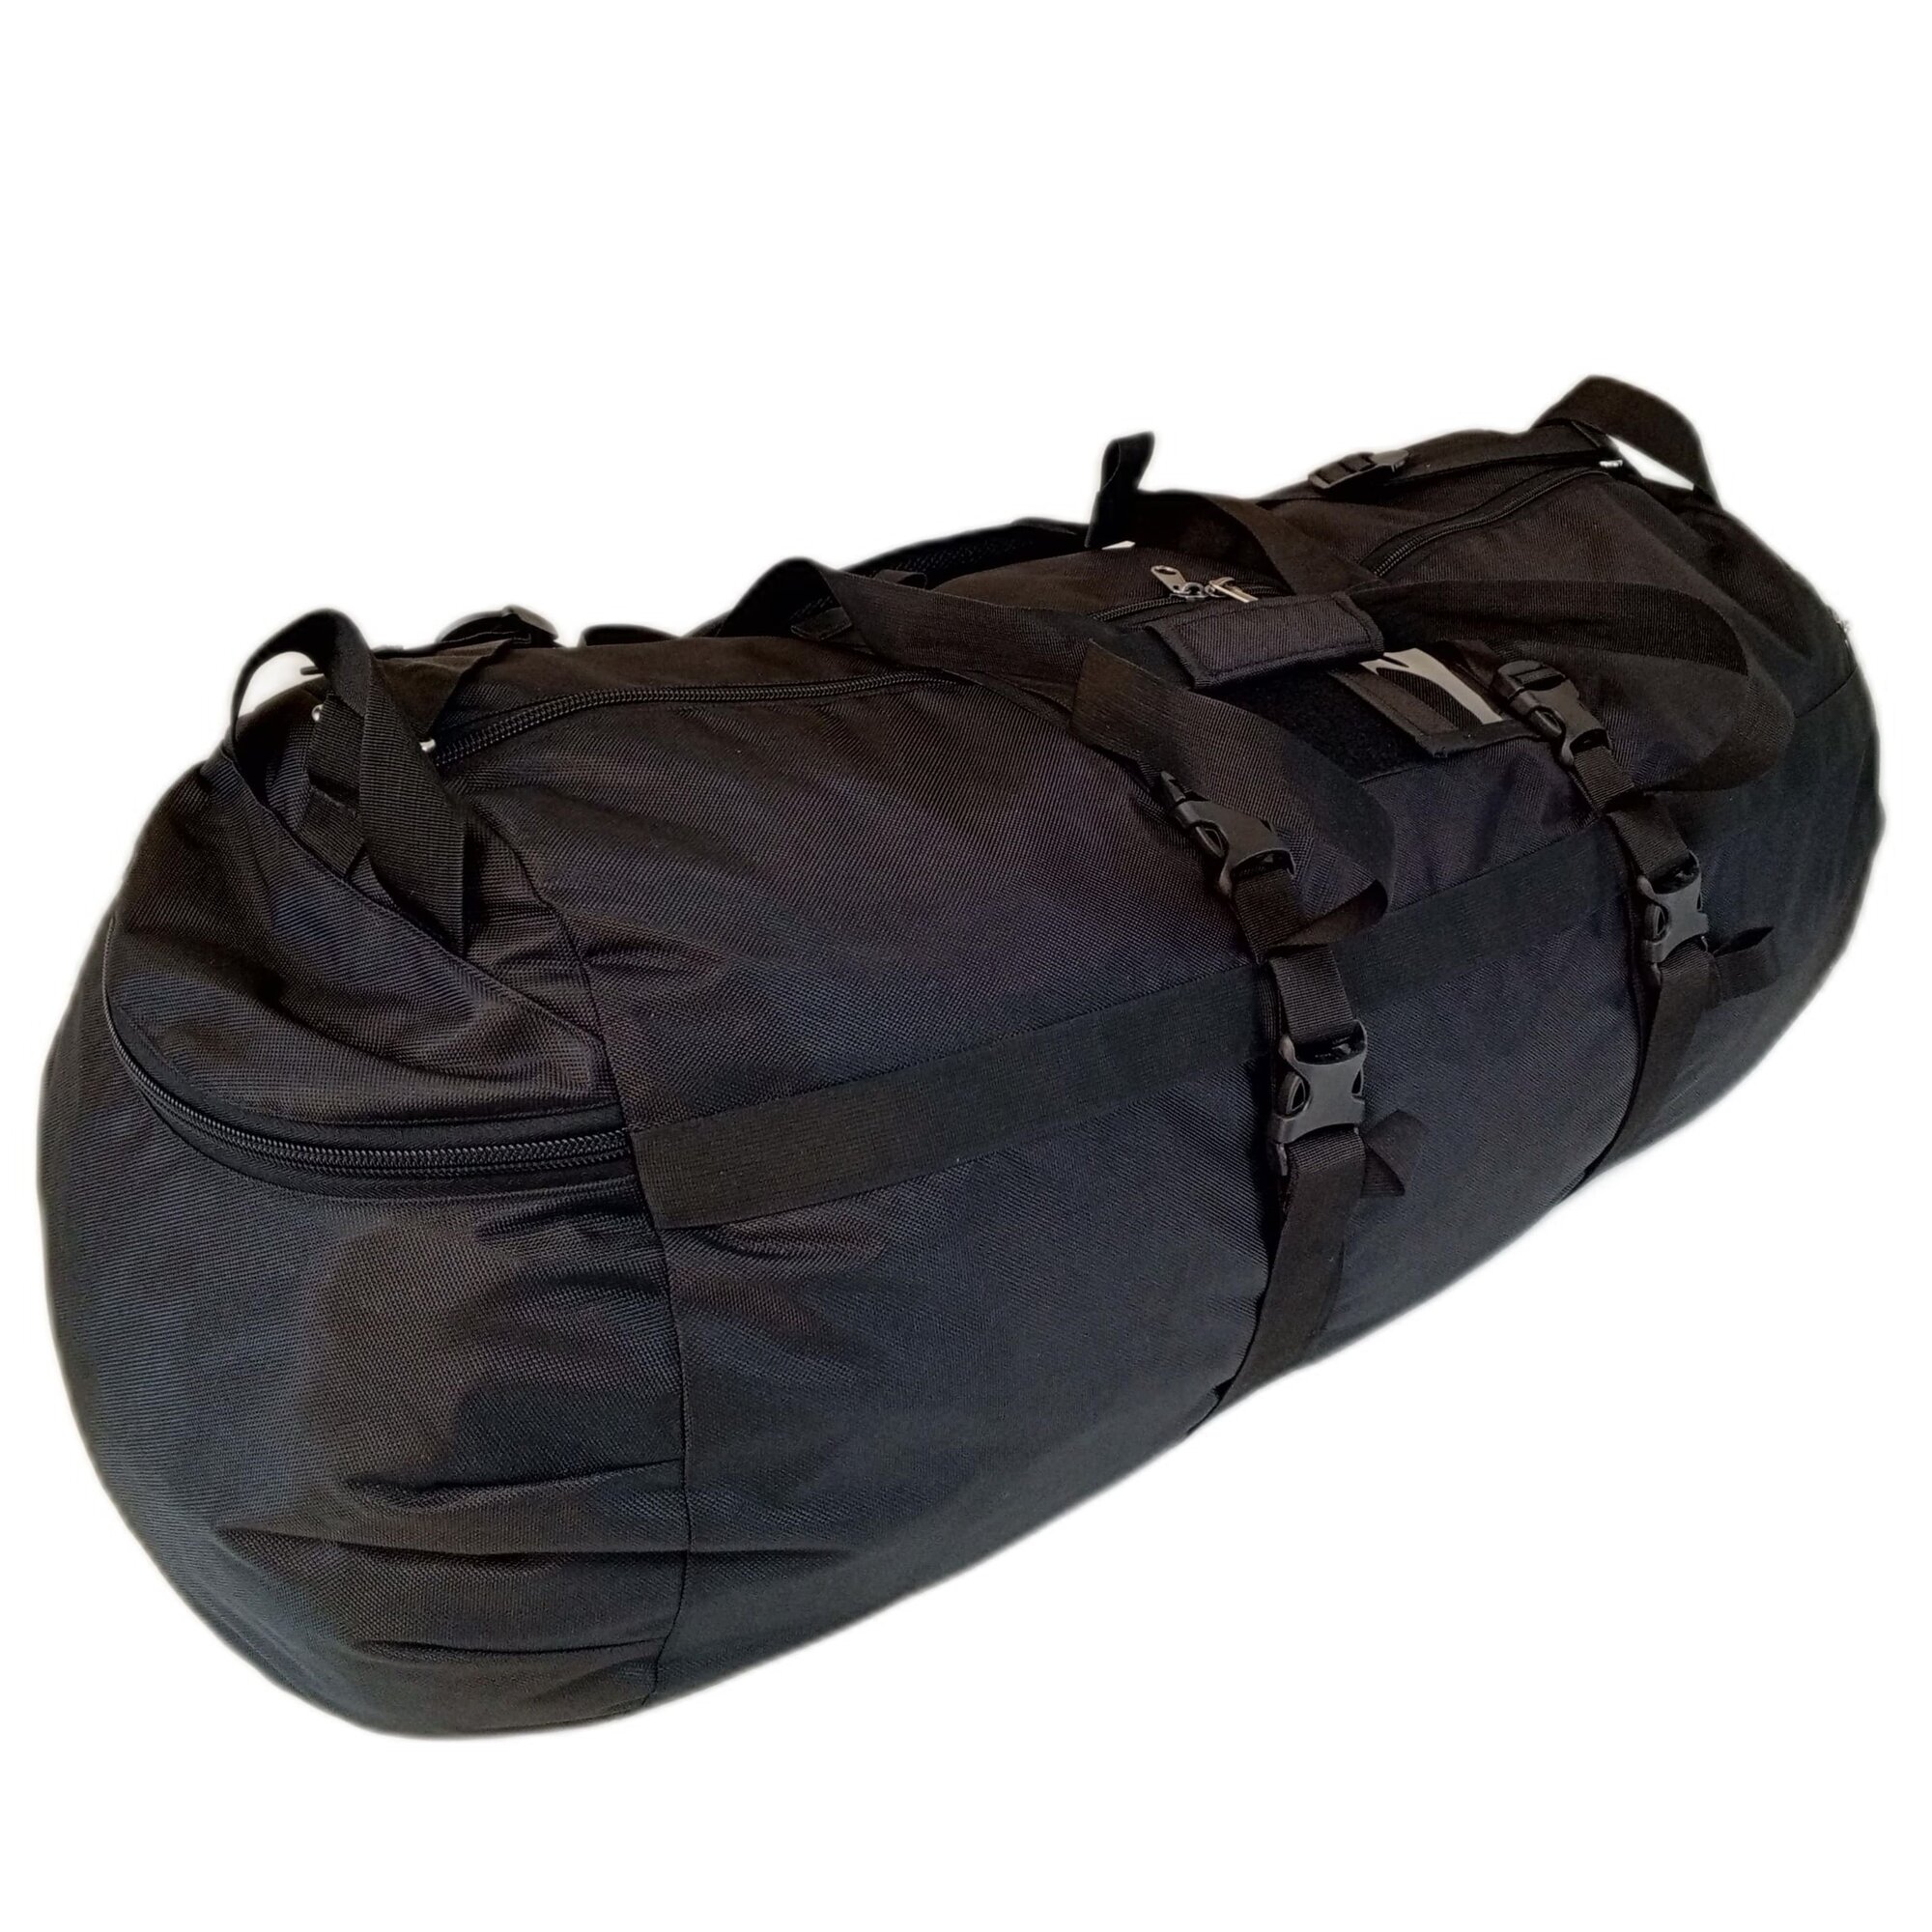 Баул "Мамонт-М" 150 литров, нагрузка до 180 кг, цвет черный